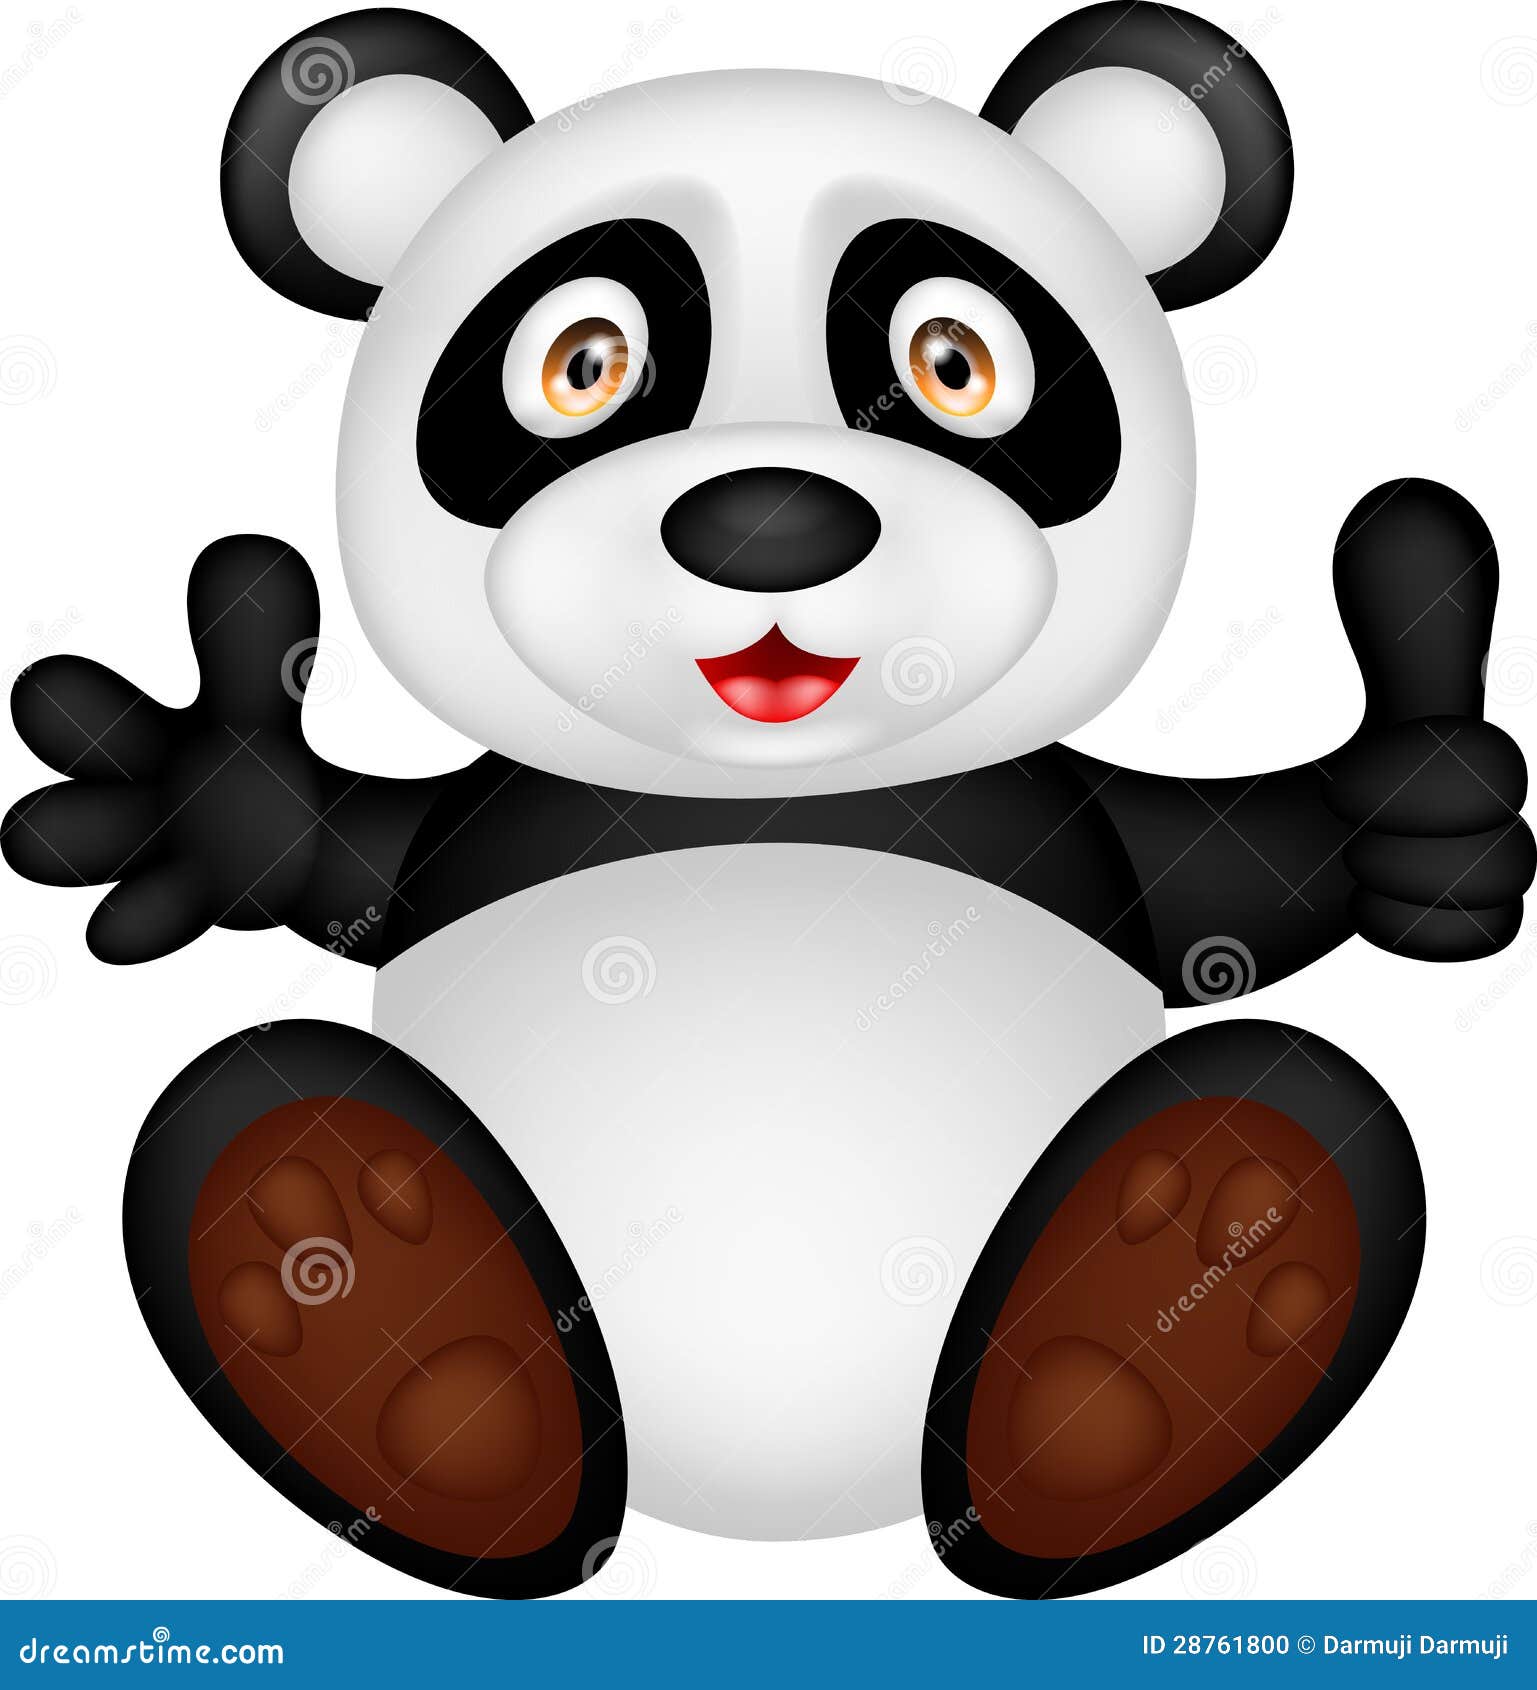 clipart panda thumbs up - photo #32